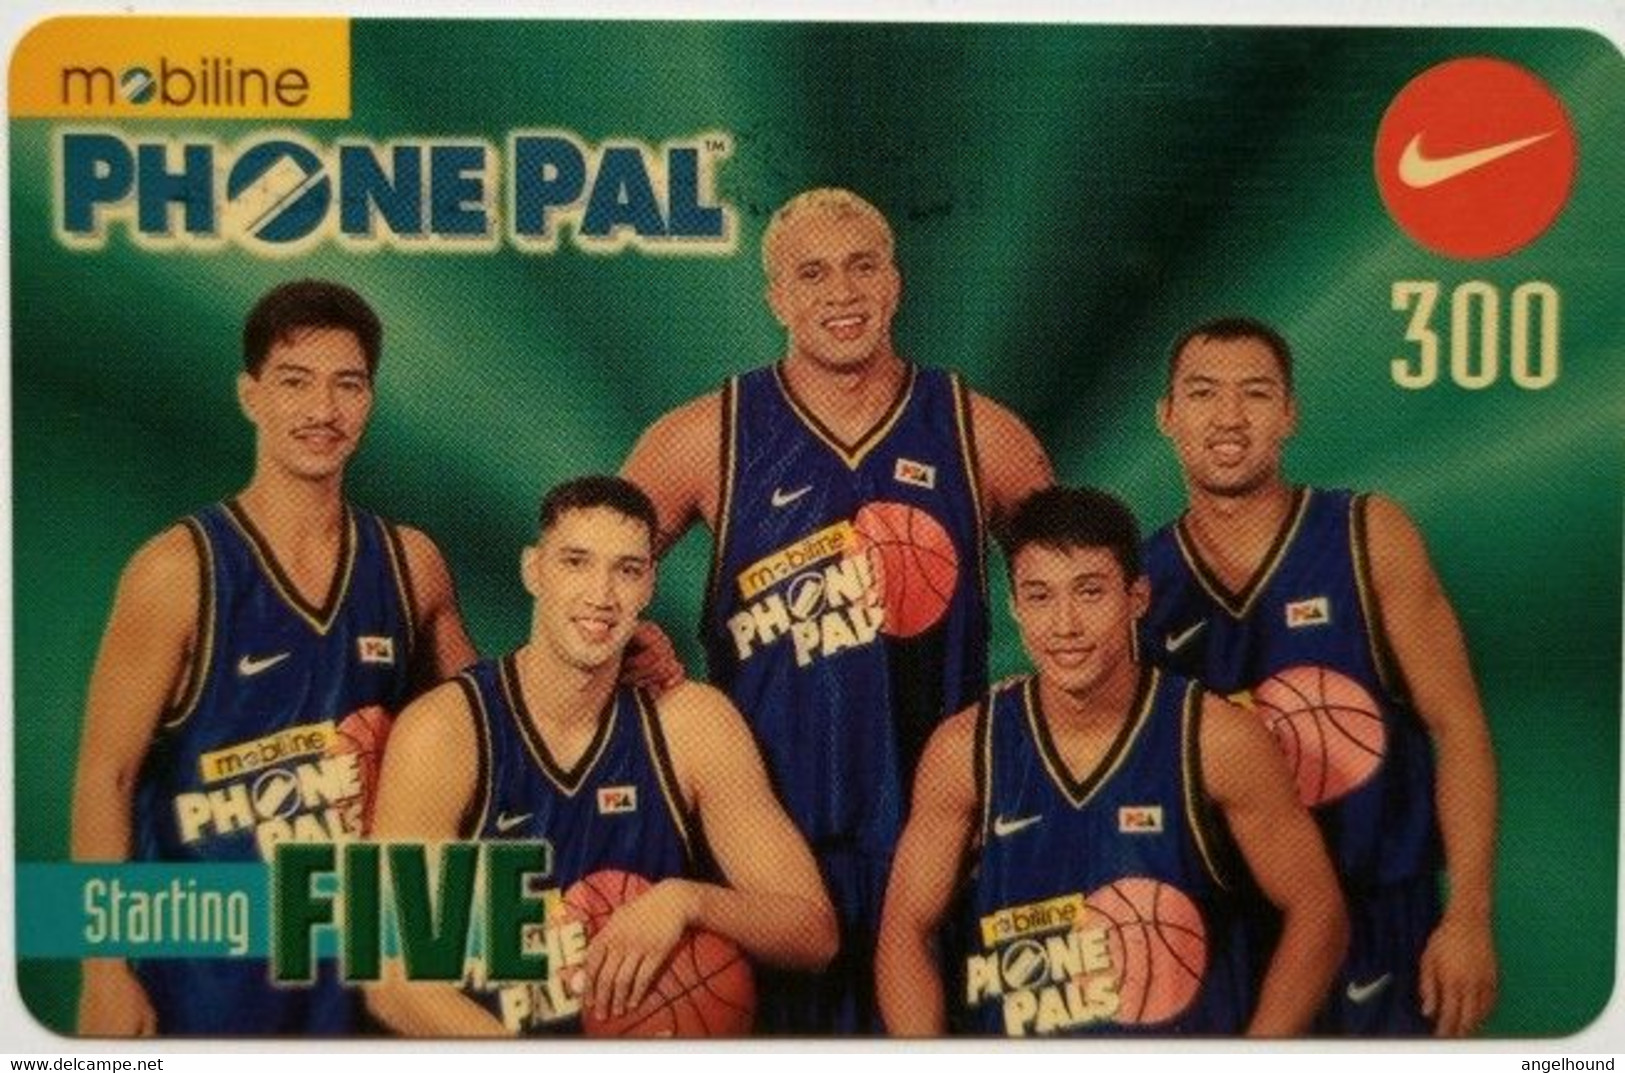 Philippines Mobiline Phonepal 300 Peso " Basketball " - Filippine